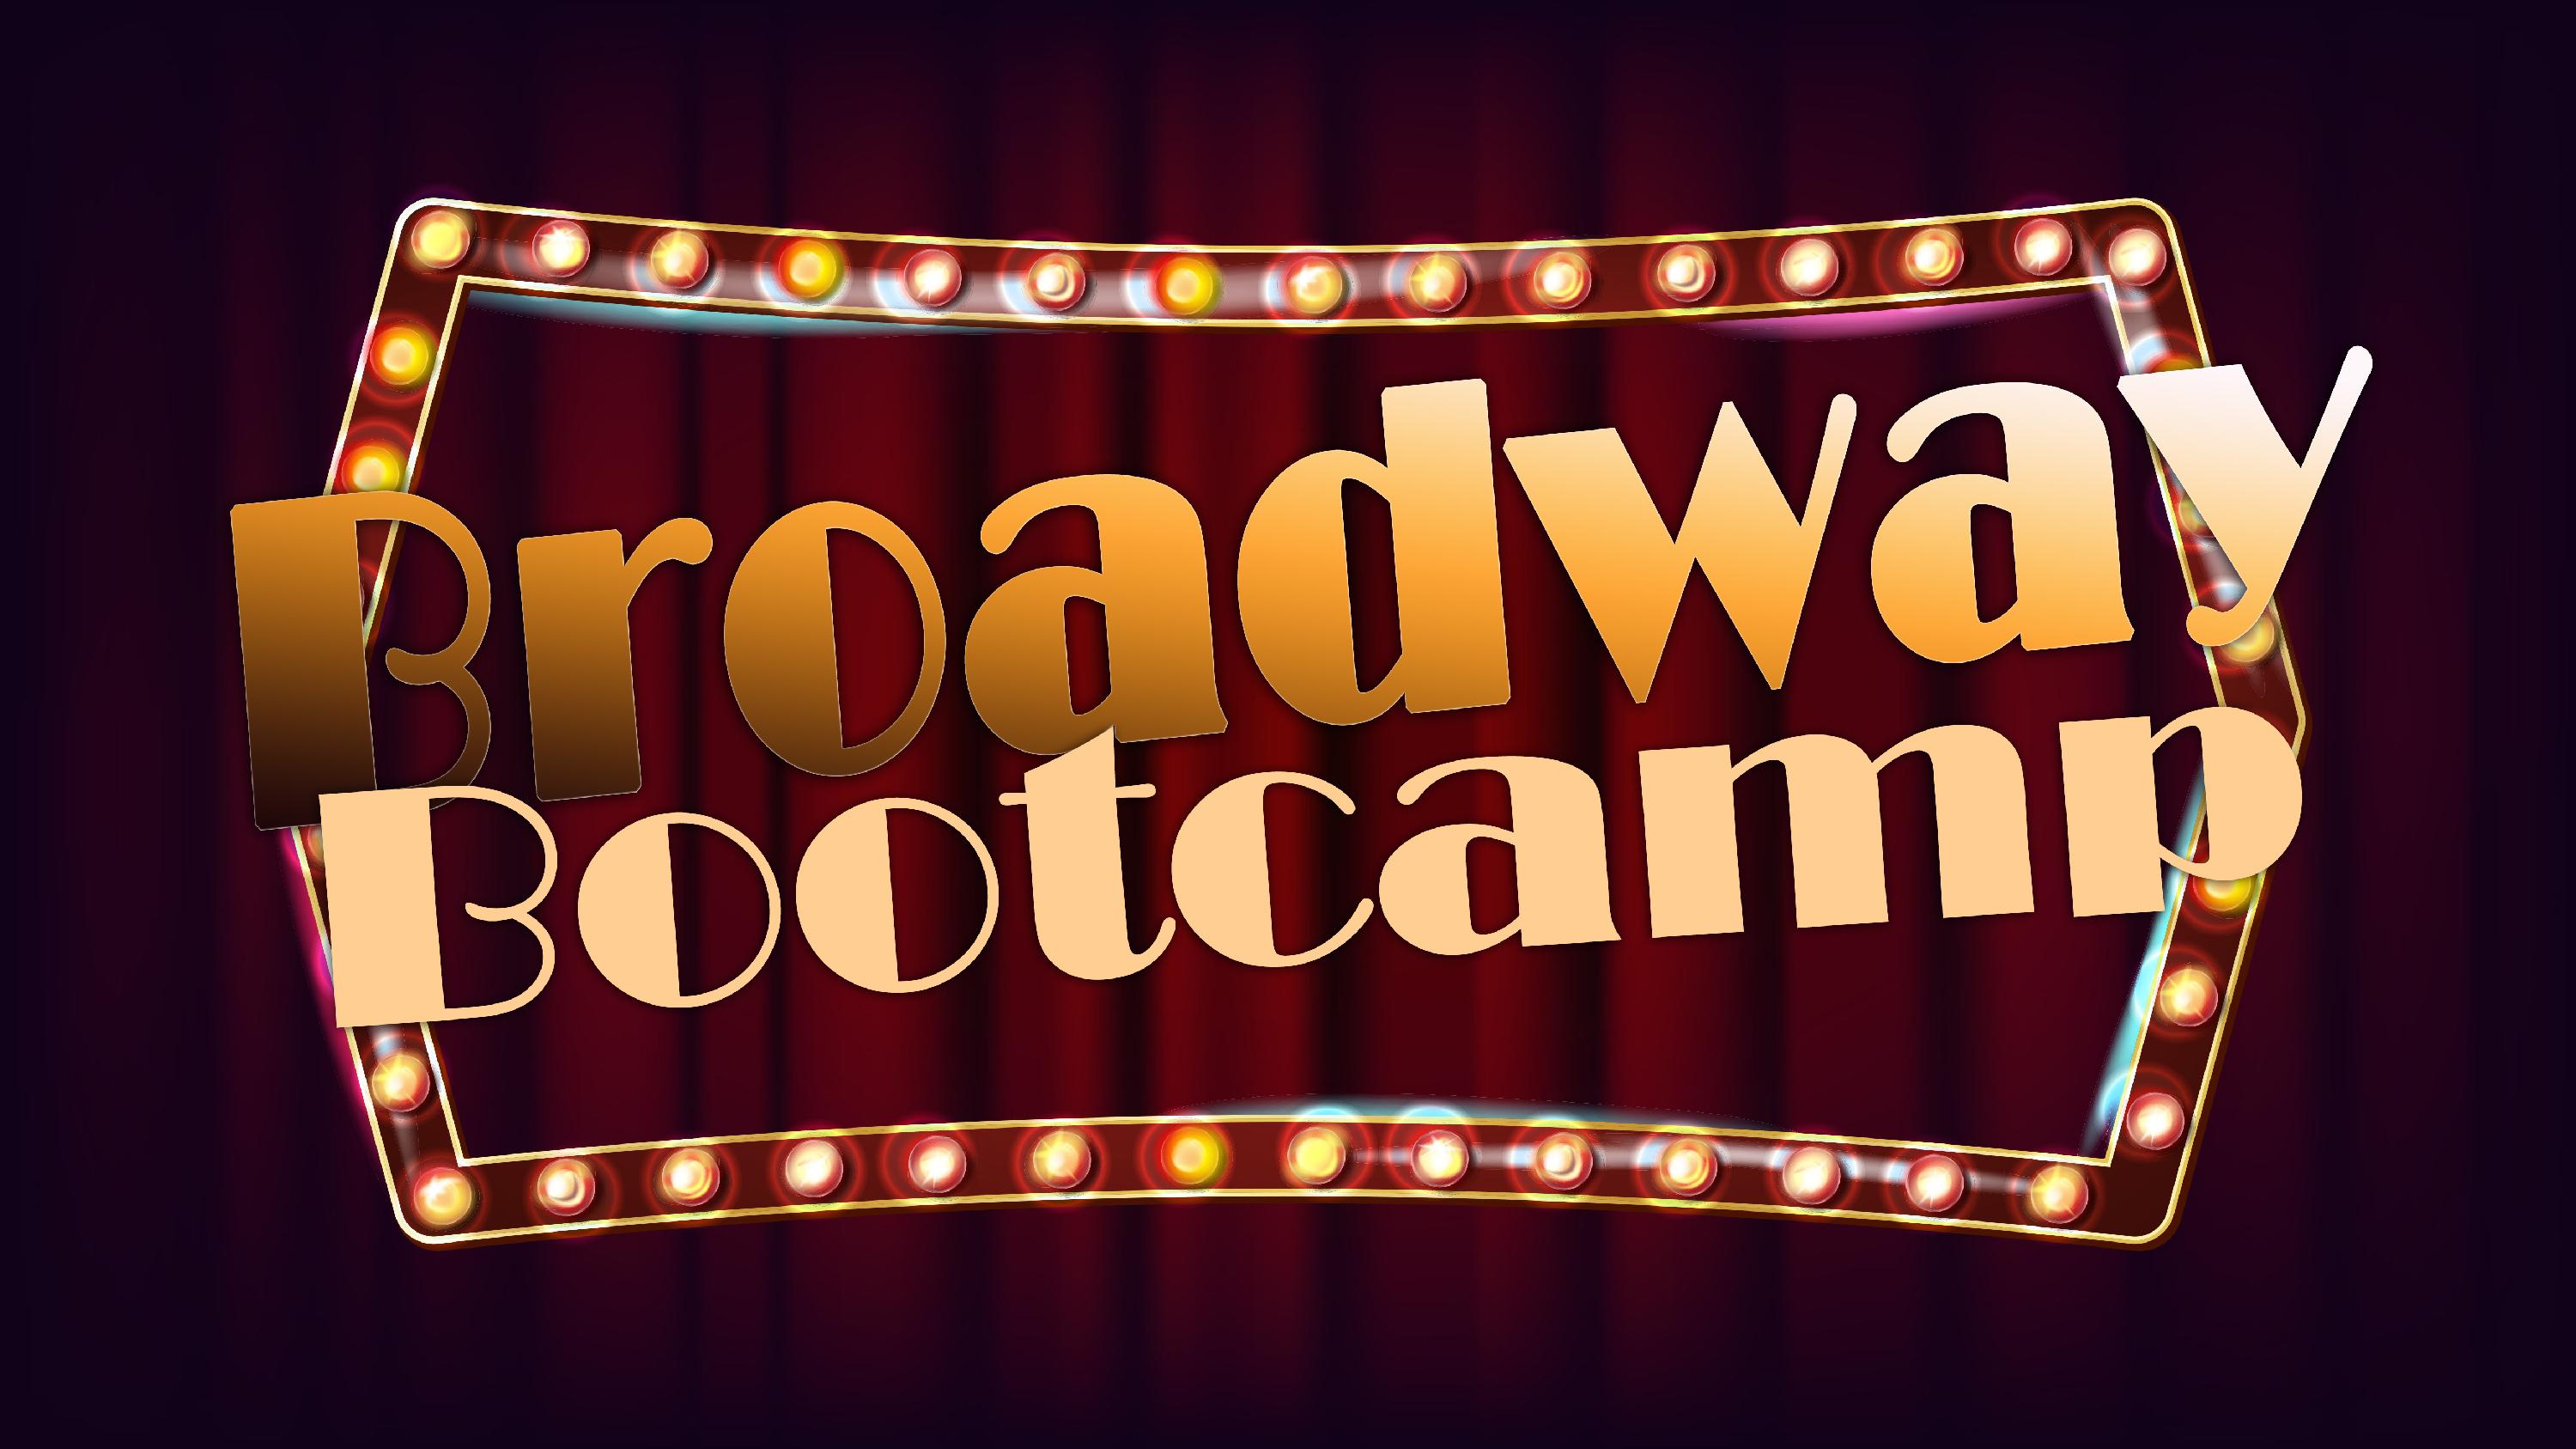 Broadway bootcamp